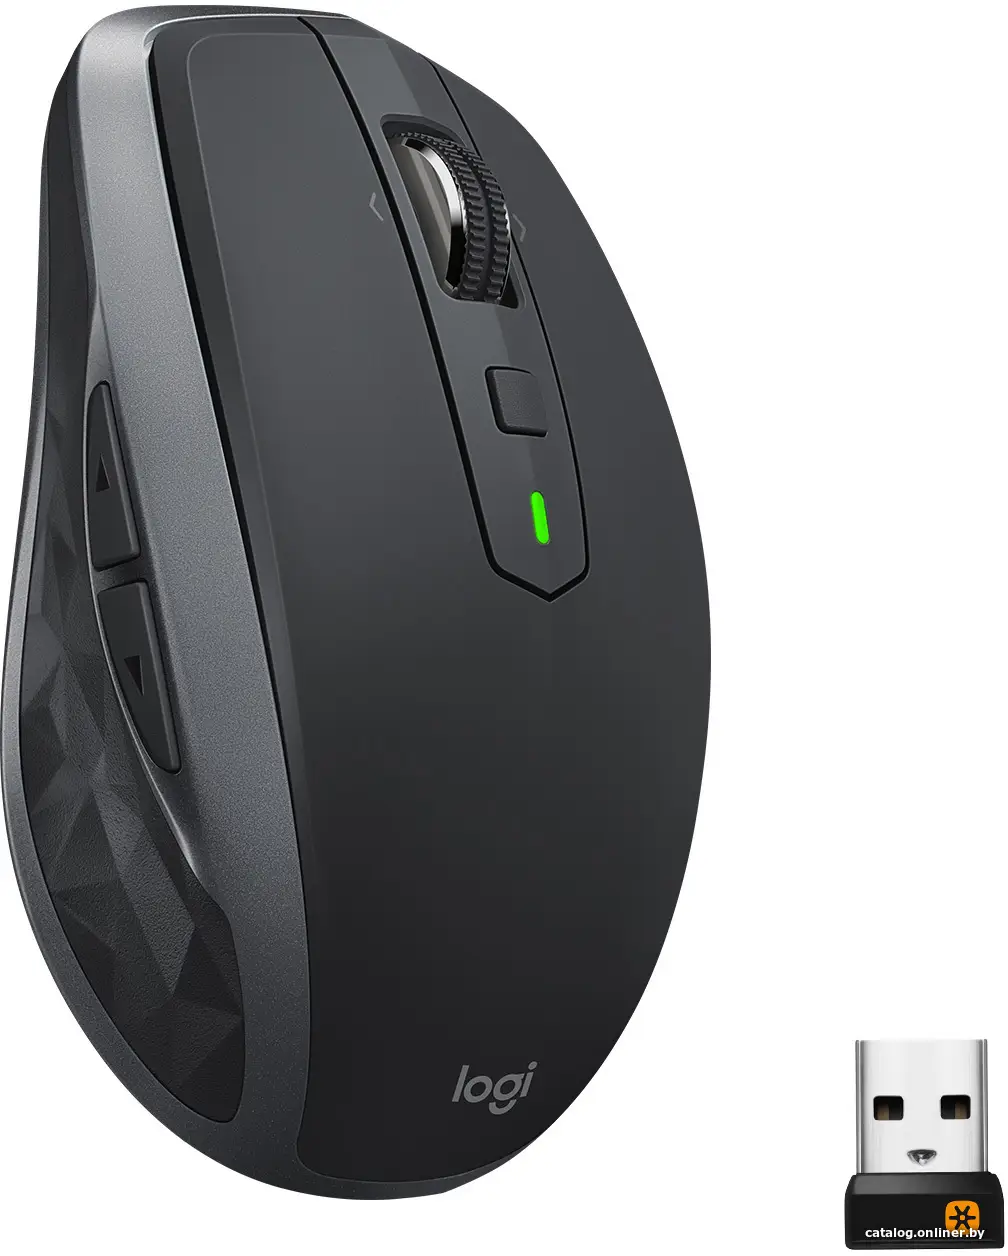 Купить Мышь Logitech MX Anywhere 2S Mouse Graphite NEW, цена, опт и розница